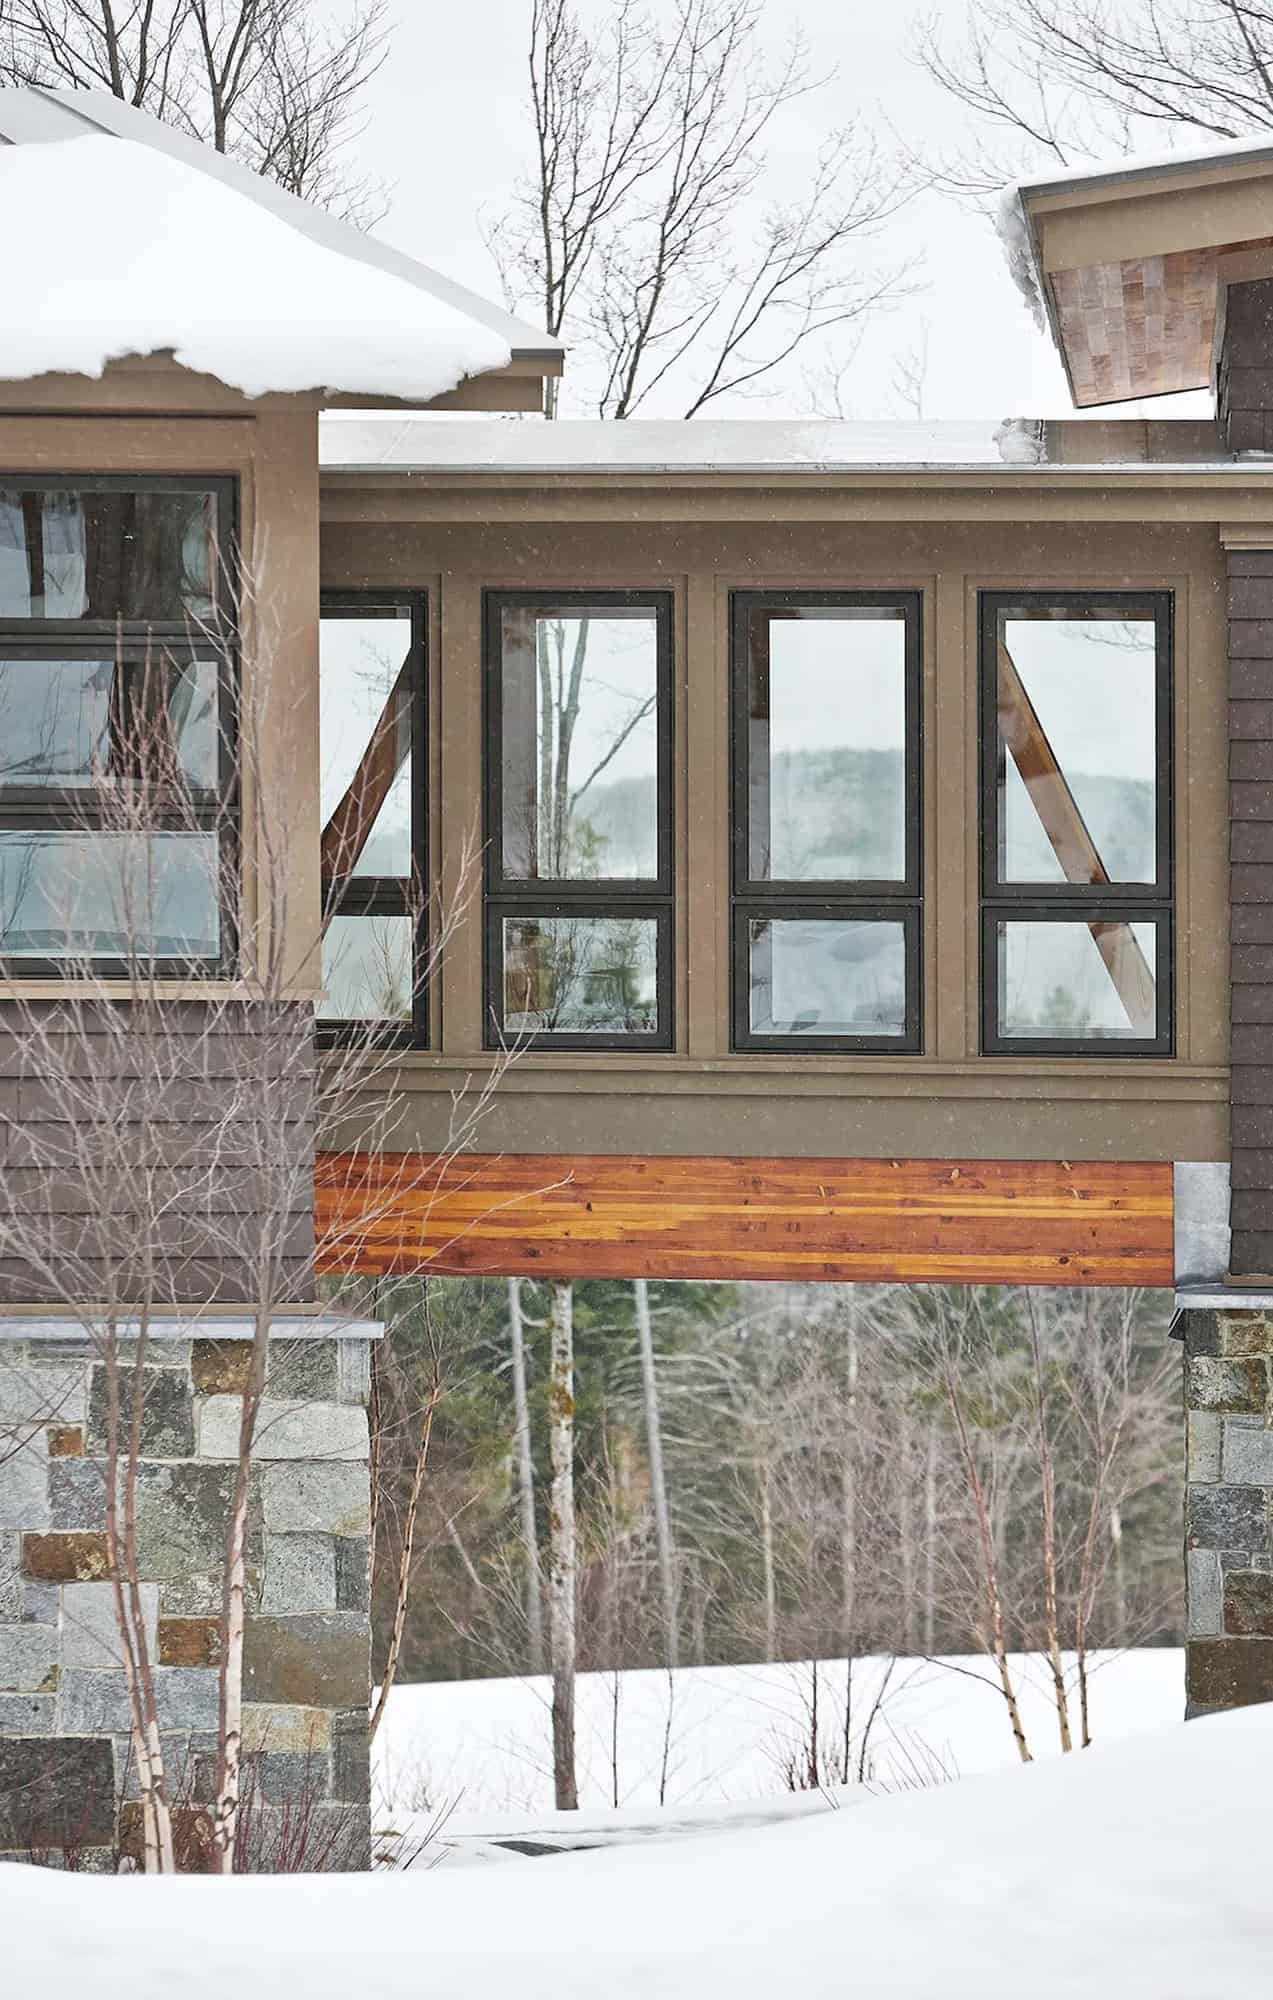 rustic-mountain-house-exterior